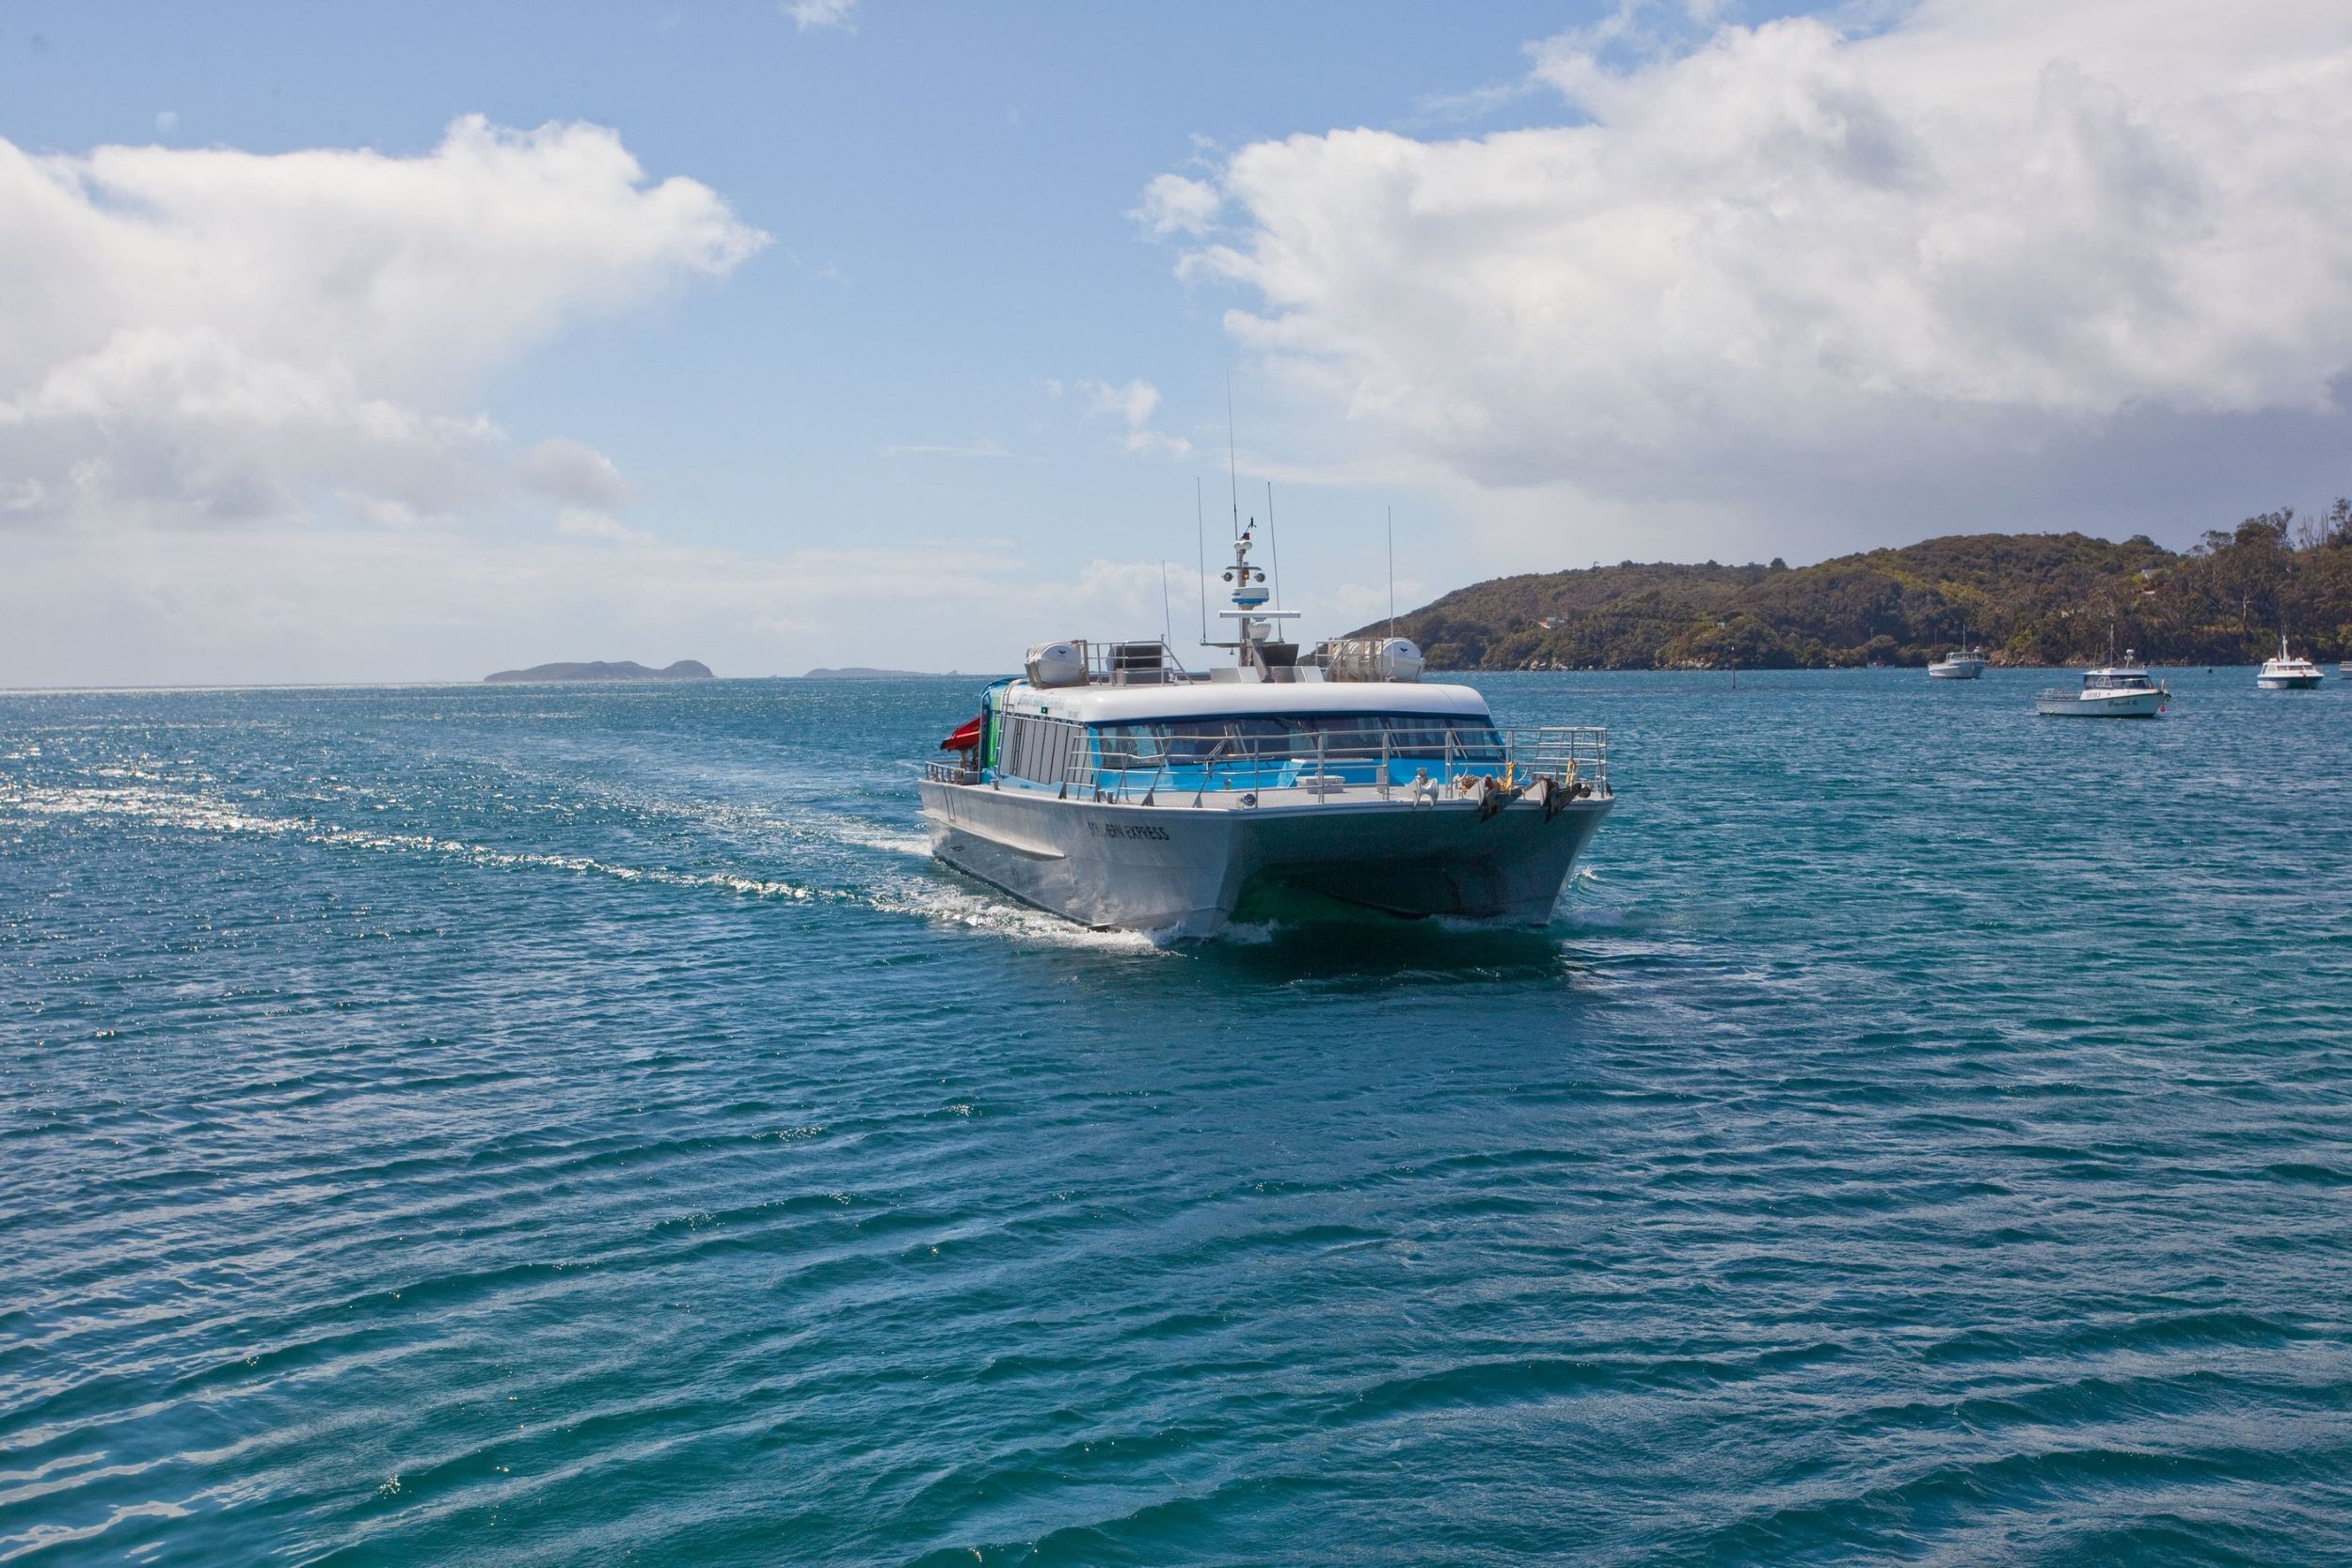 Stewart Island Ferry cruises across the Foveaux Strait